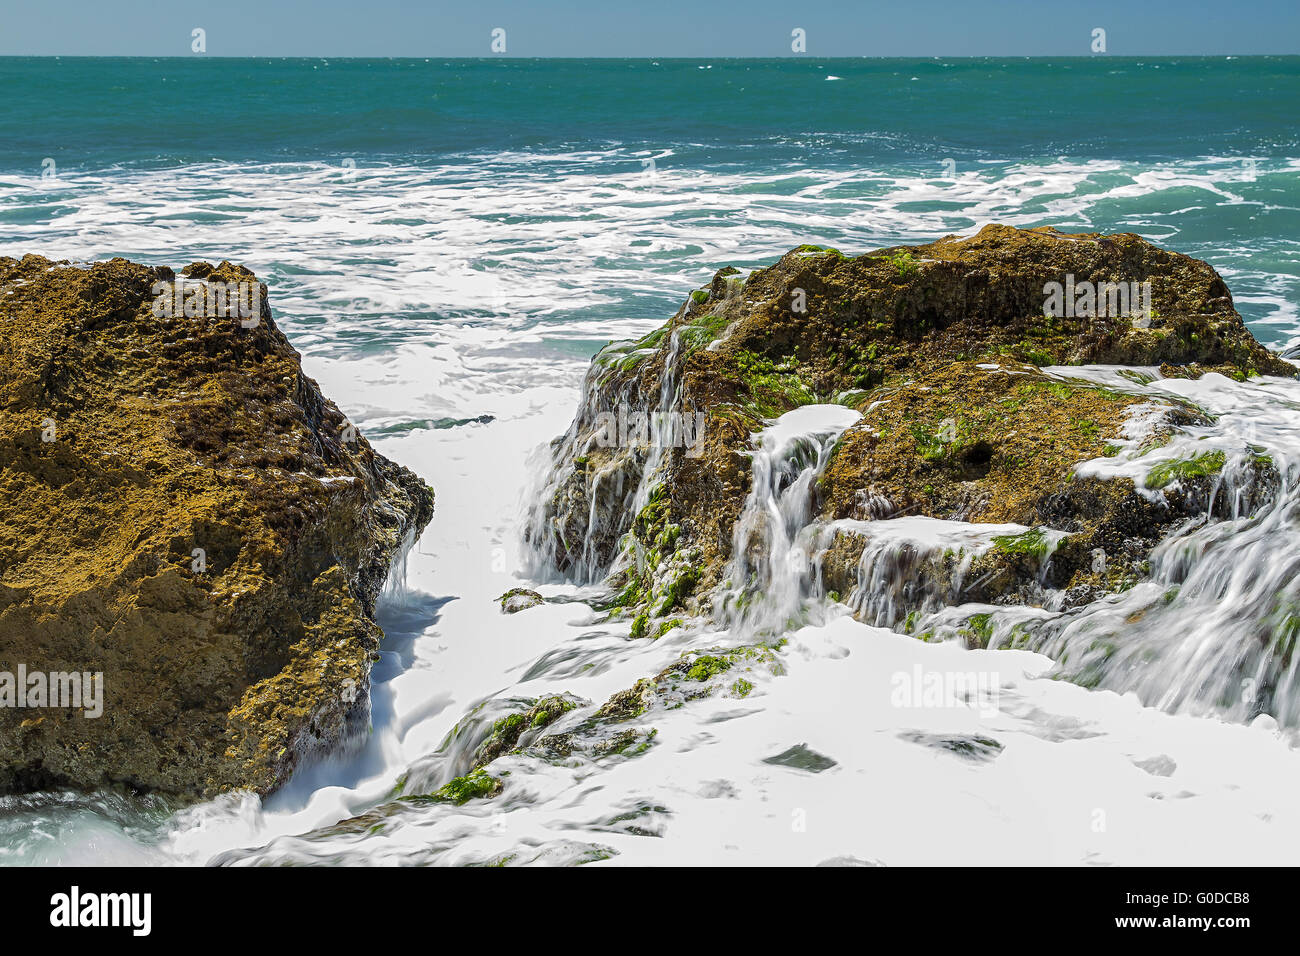 Türkis, rollende Welle knallte auf den Felsen. Stockfoto